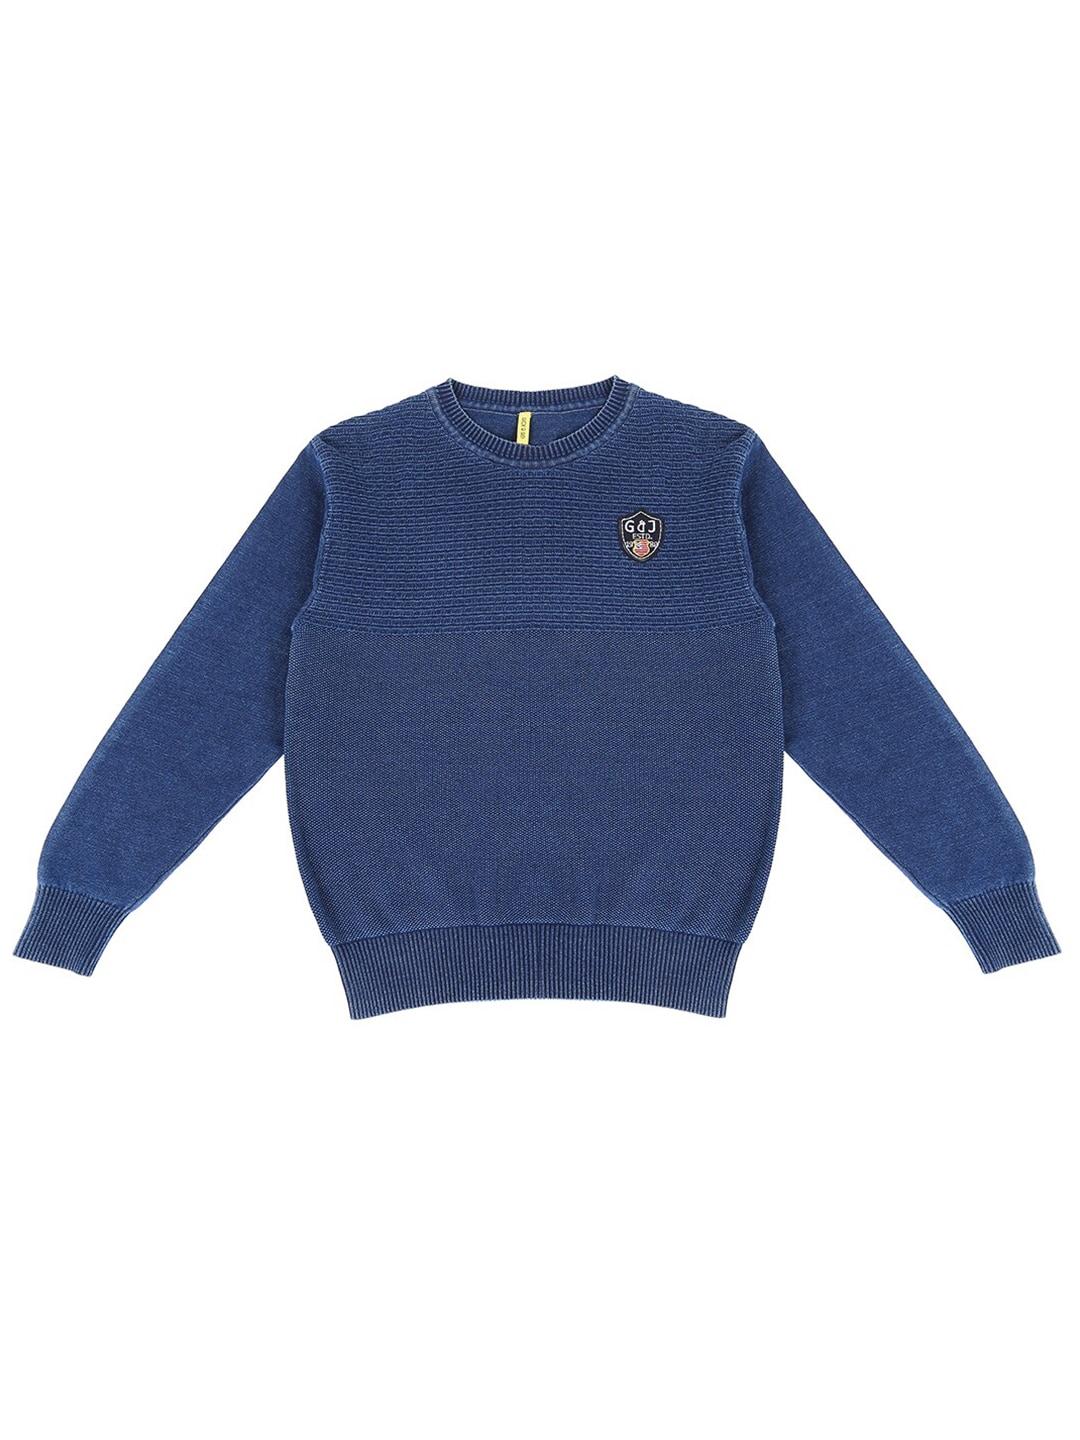 gini-and-jony-boys-blue-crop-sweater-vest